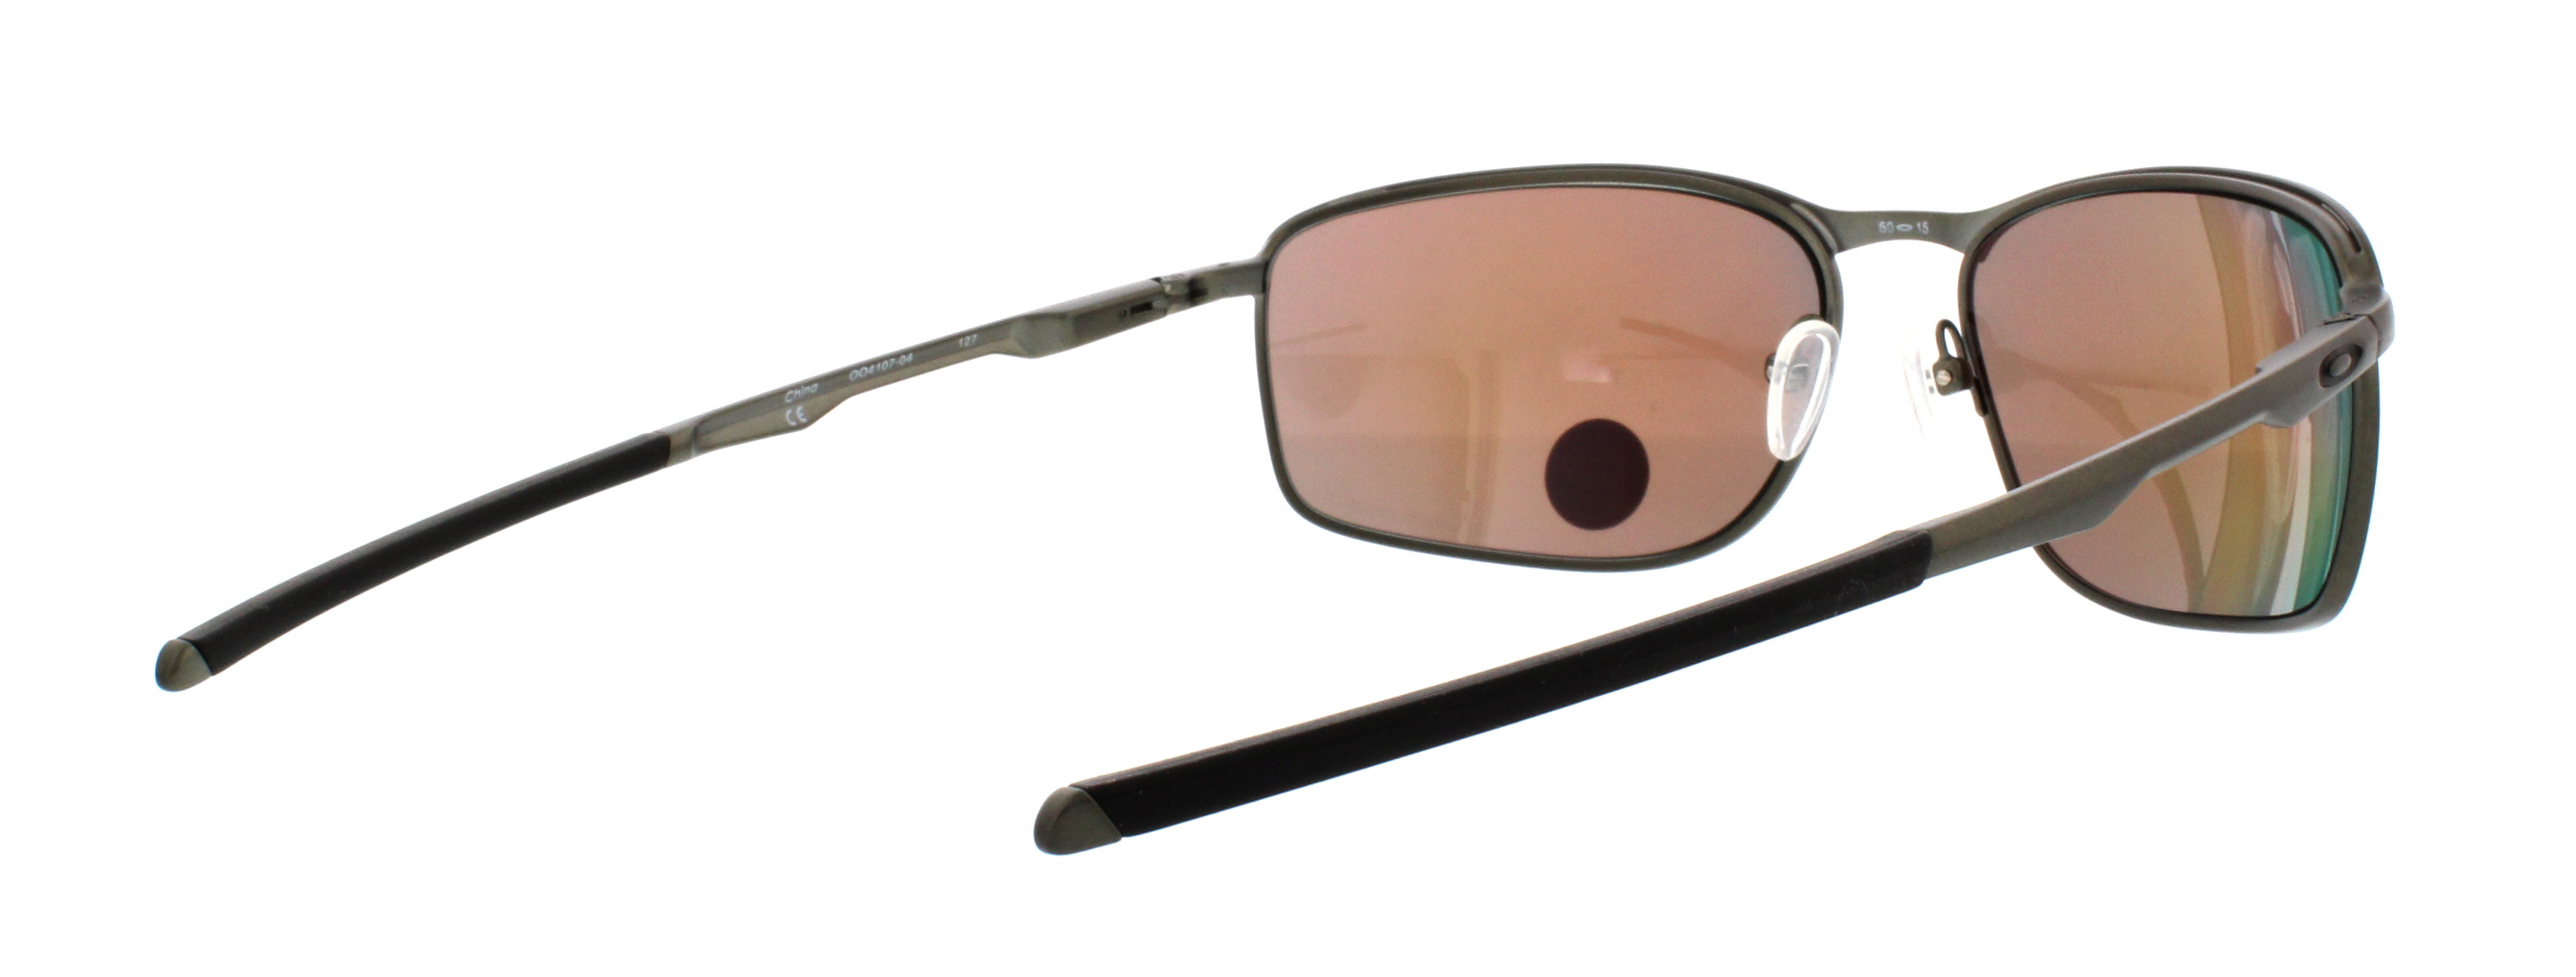 Óculos Oakley Cooper Juliet Premium C/ Sides – OutletR8